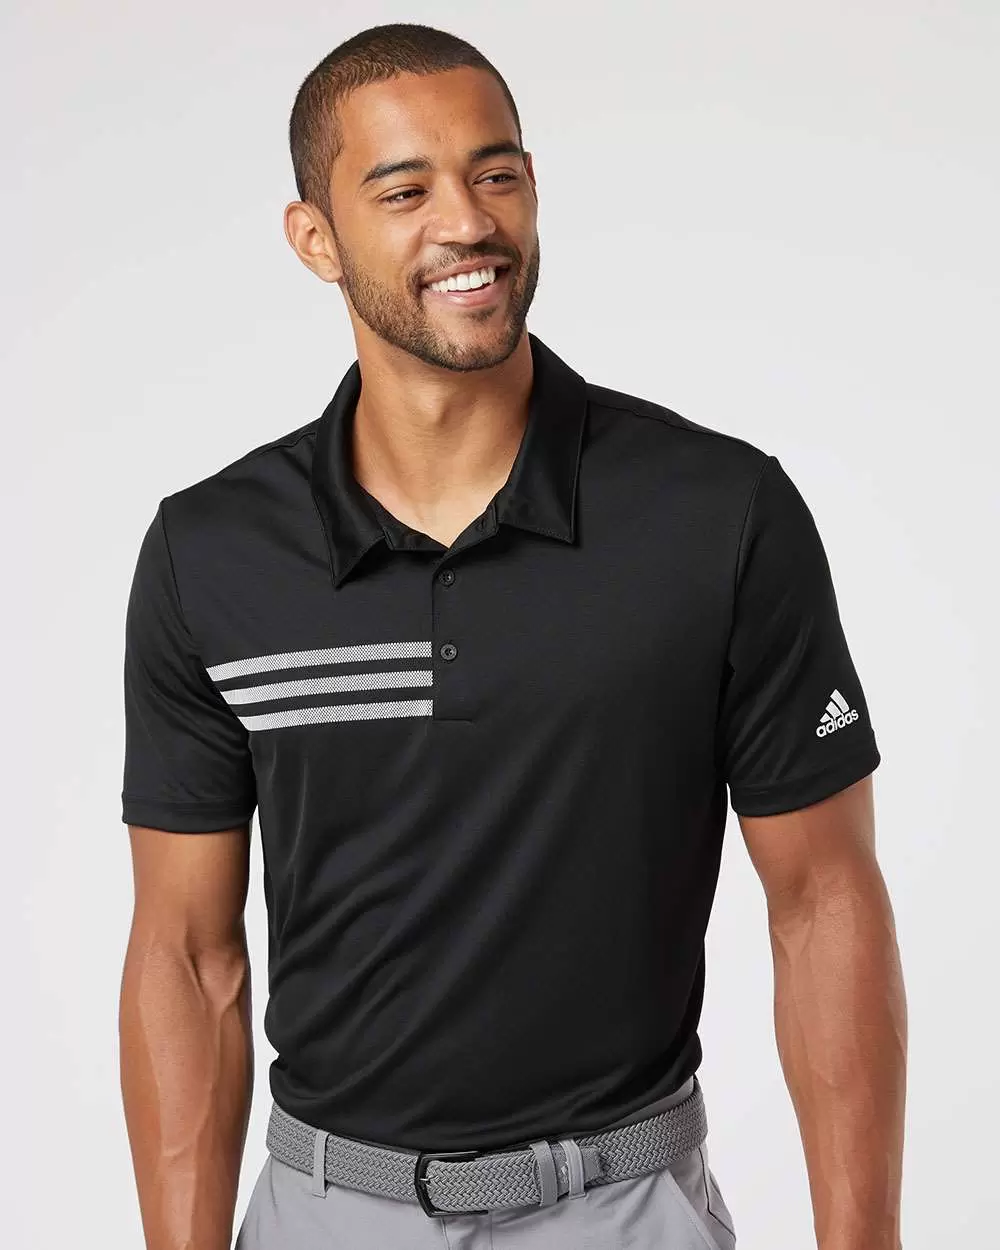 Adidas Golf Clothing A324 3-Stripes Chest Sport Shirt Black/ White - $30.34